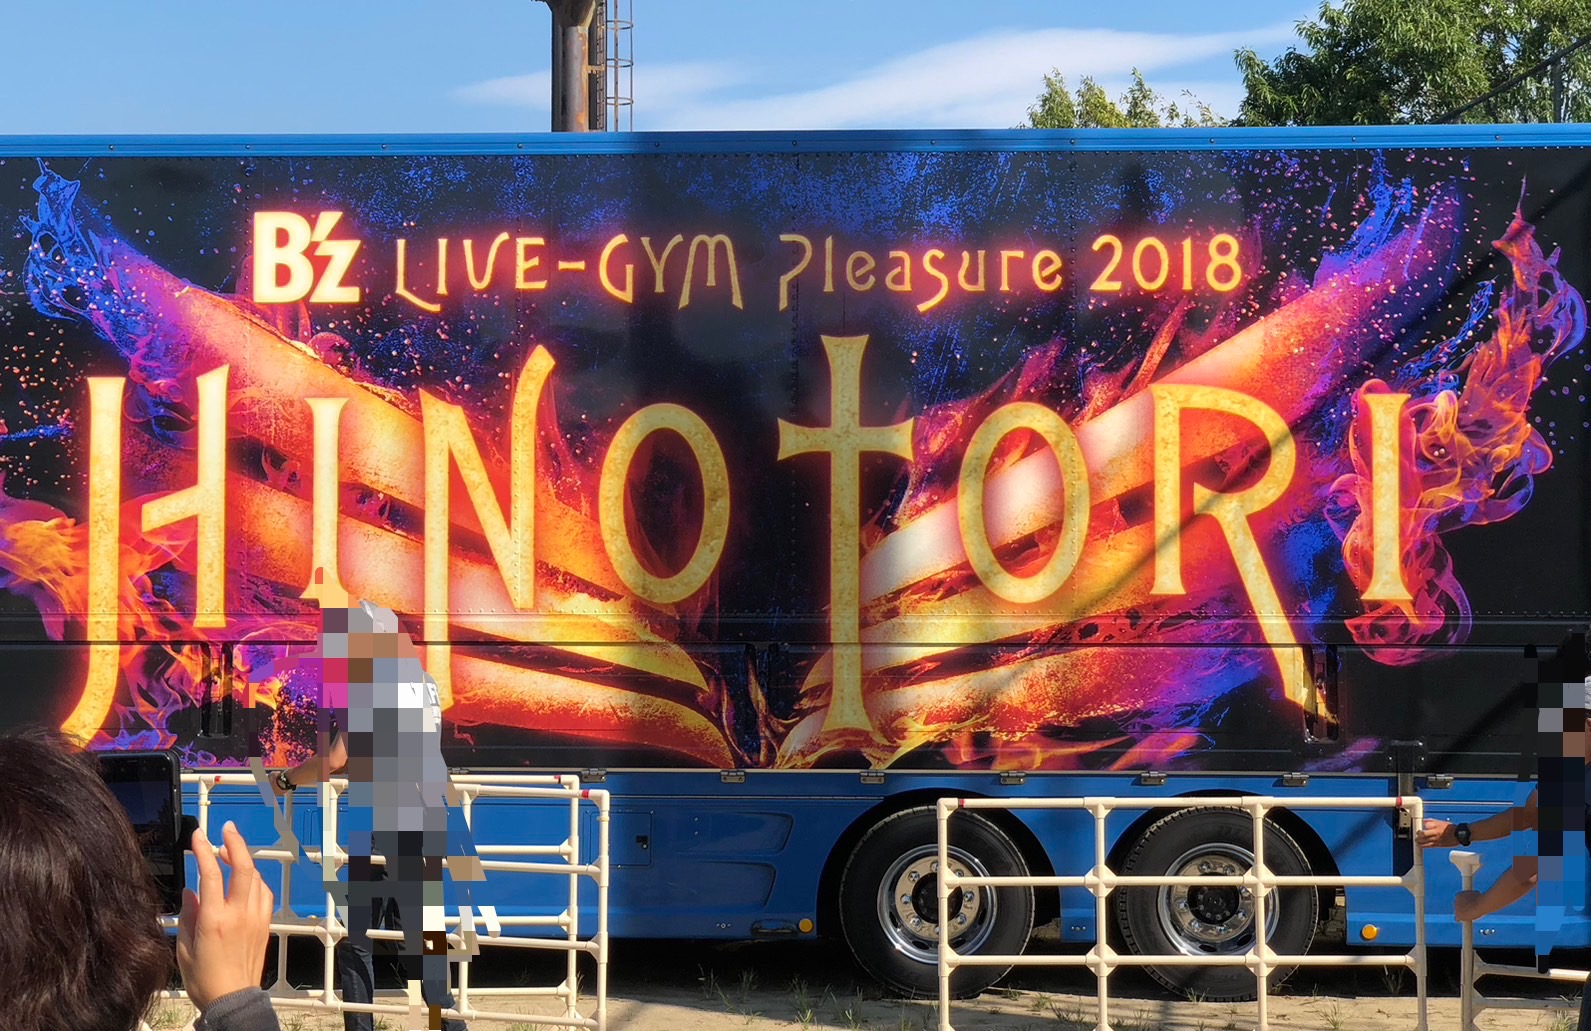 『B'z LIVE-GYM Pleasure 2018 -HINOTORI-』のツアートラック